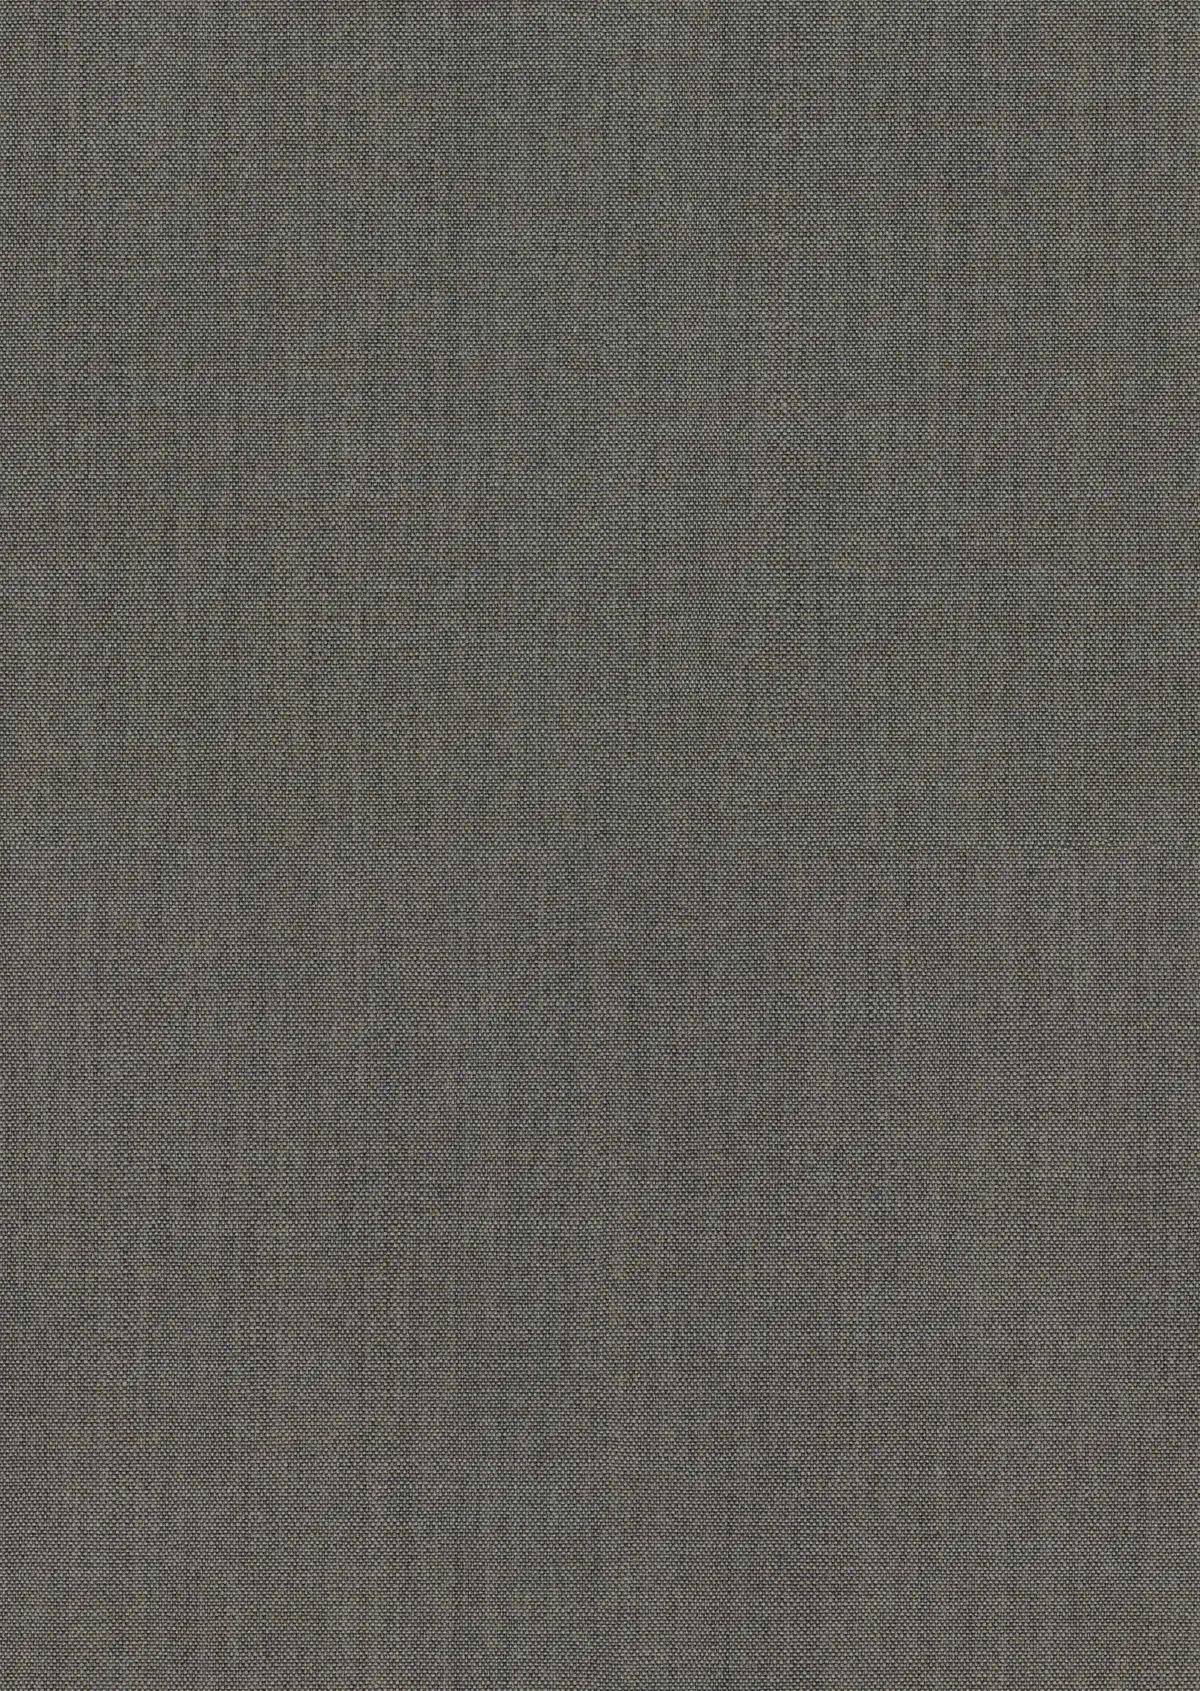 Fabric sample Remix 3 133 grey